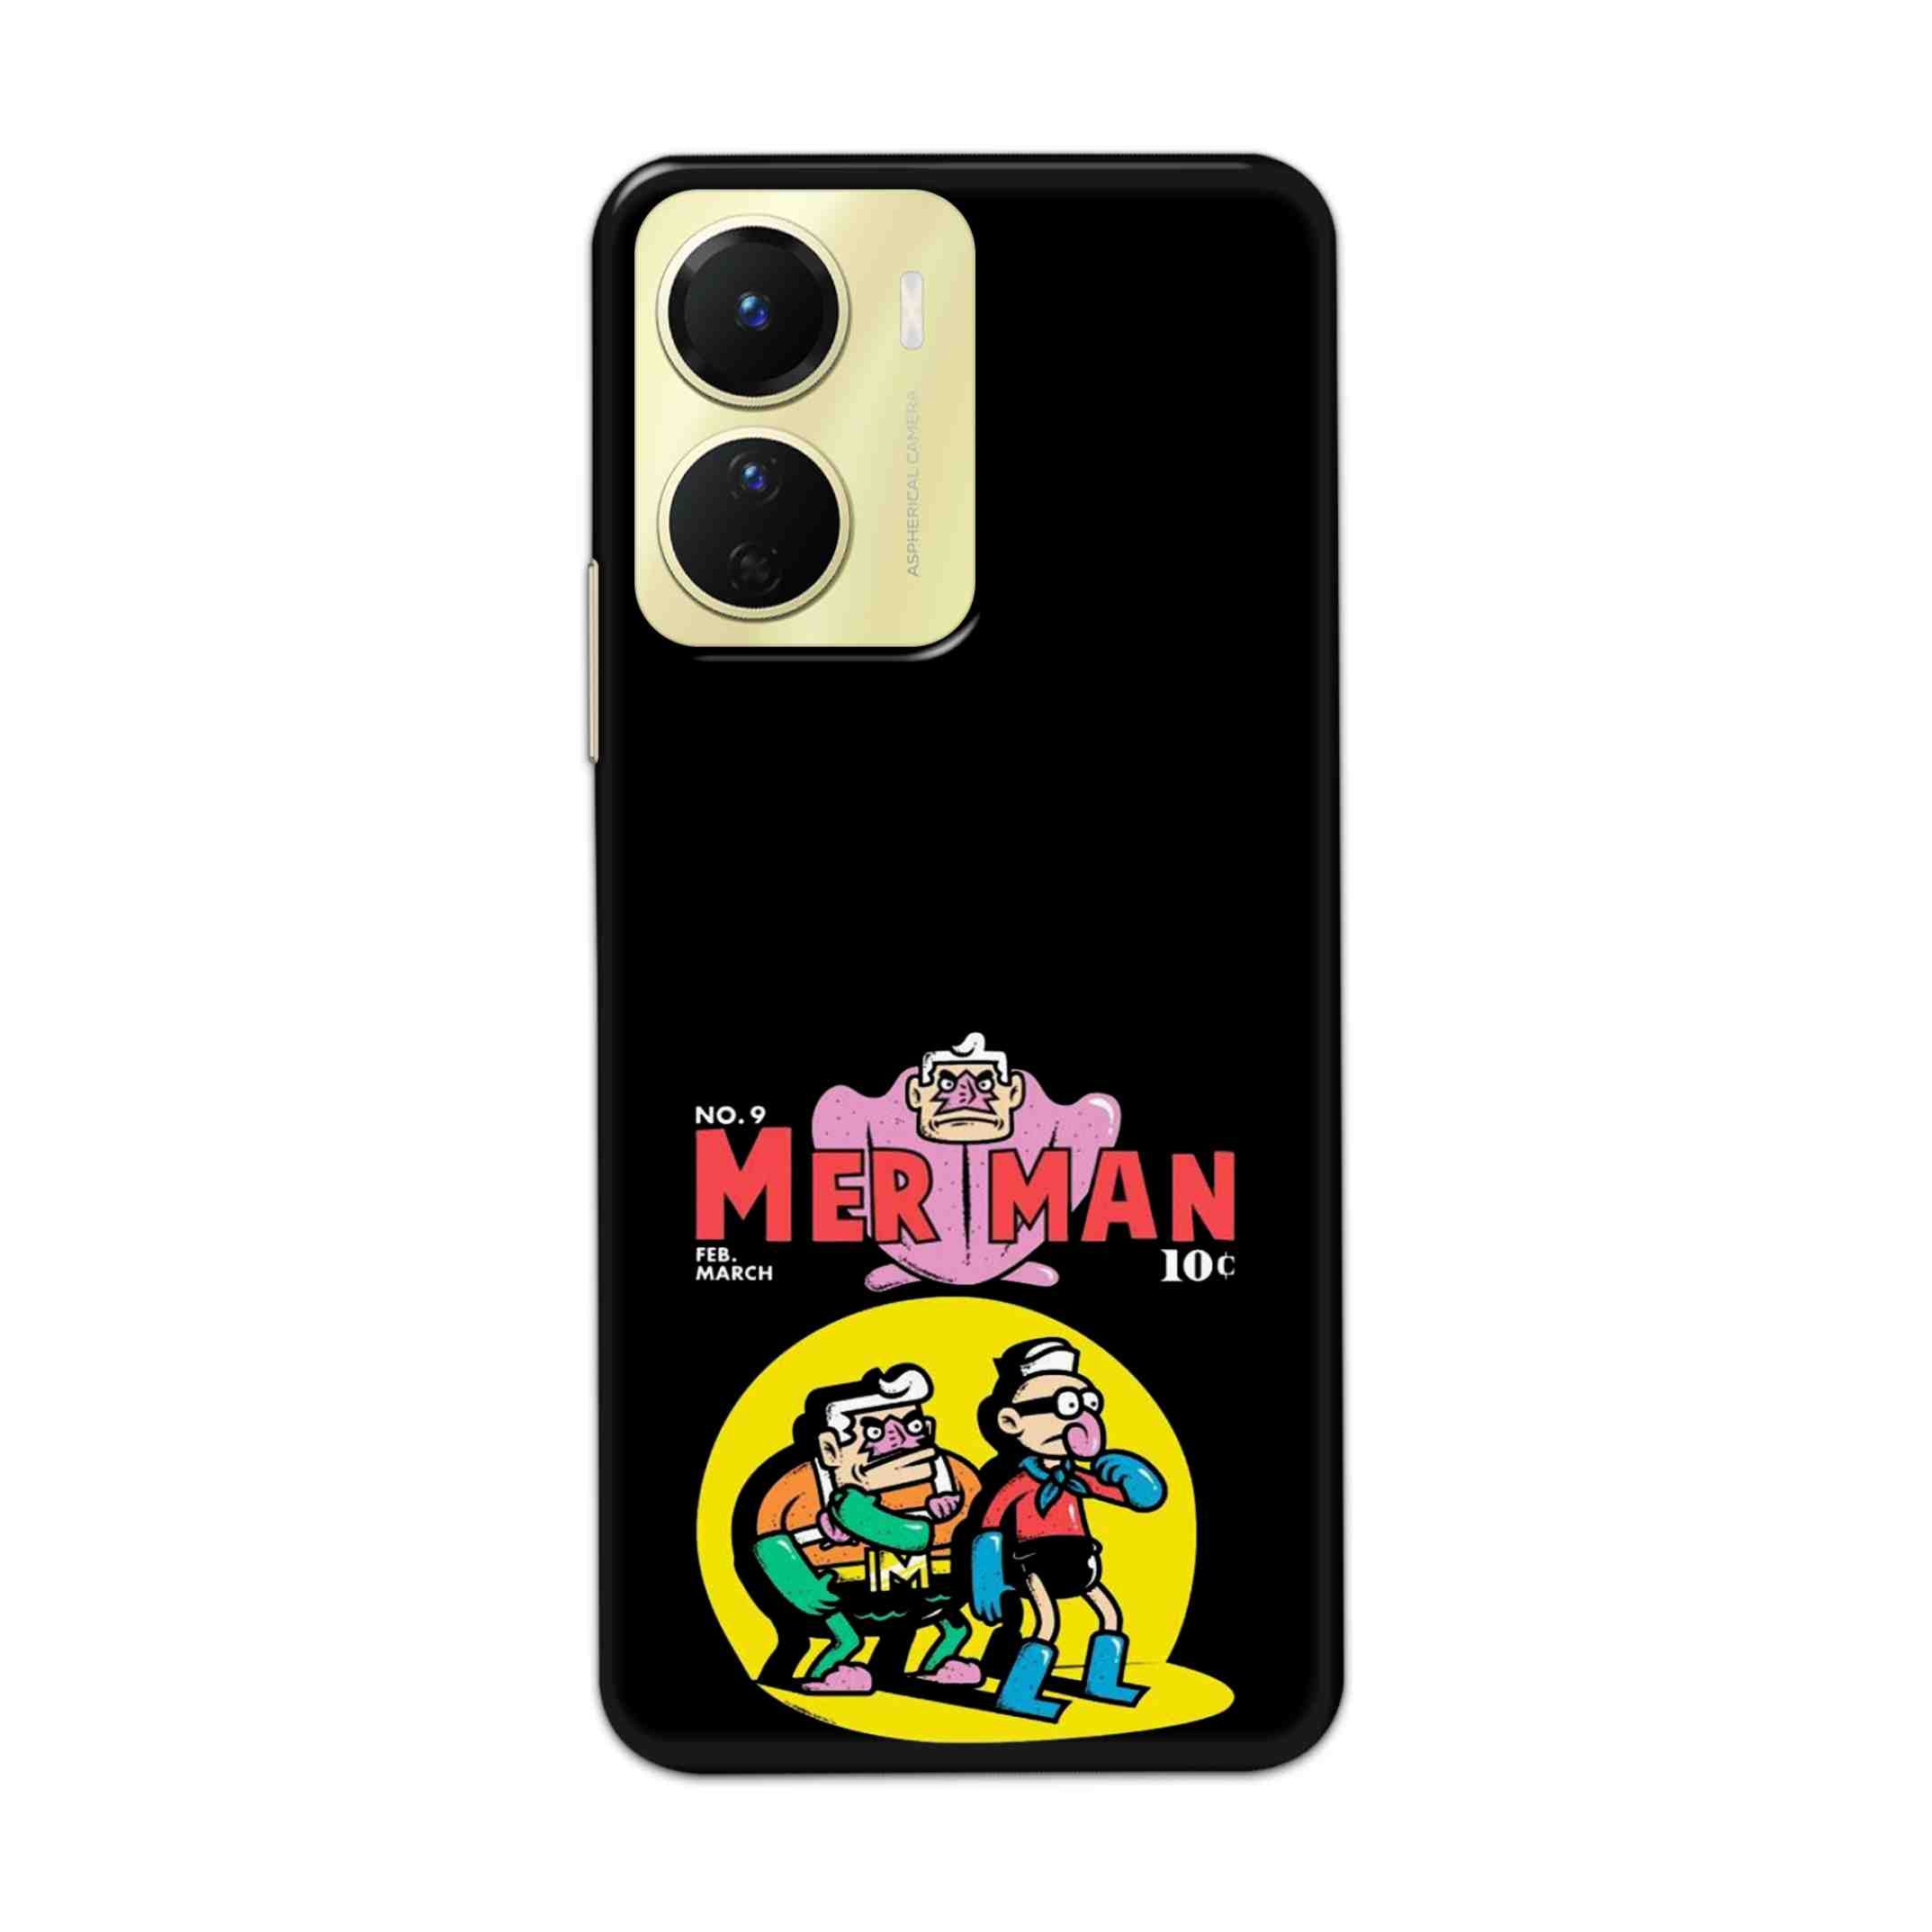 Buy Merman Hard Back Mobile Phone Case Cover For Vivo Y16 Online